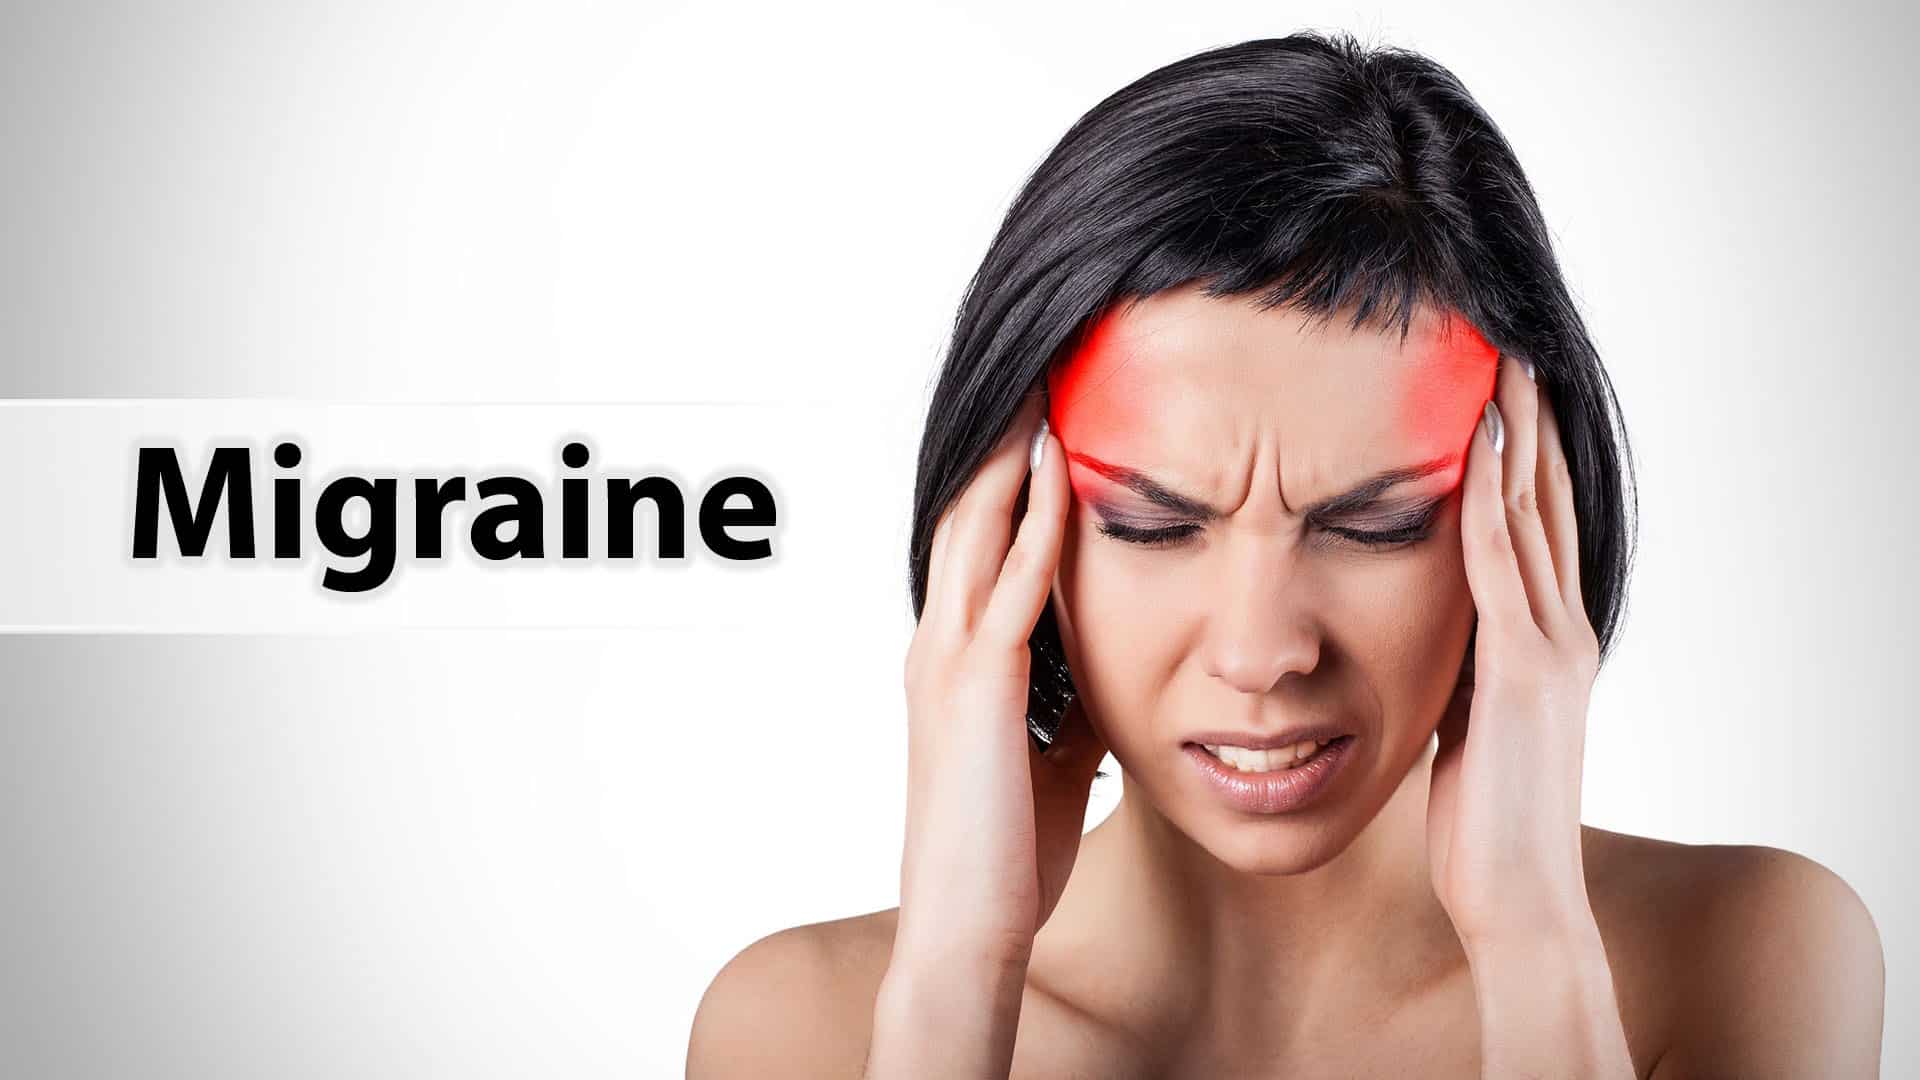 Ketamine may help treat migraine